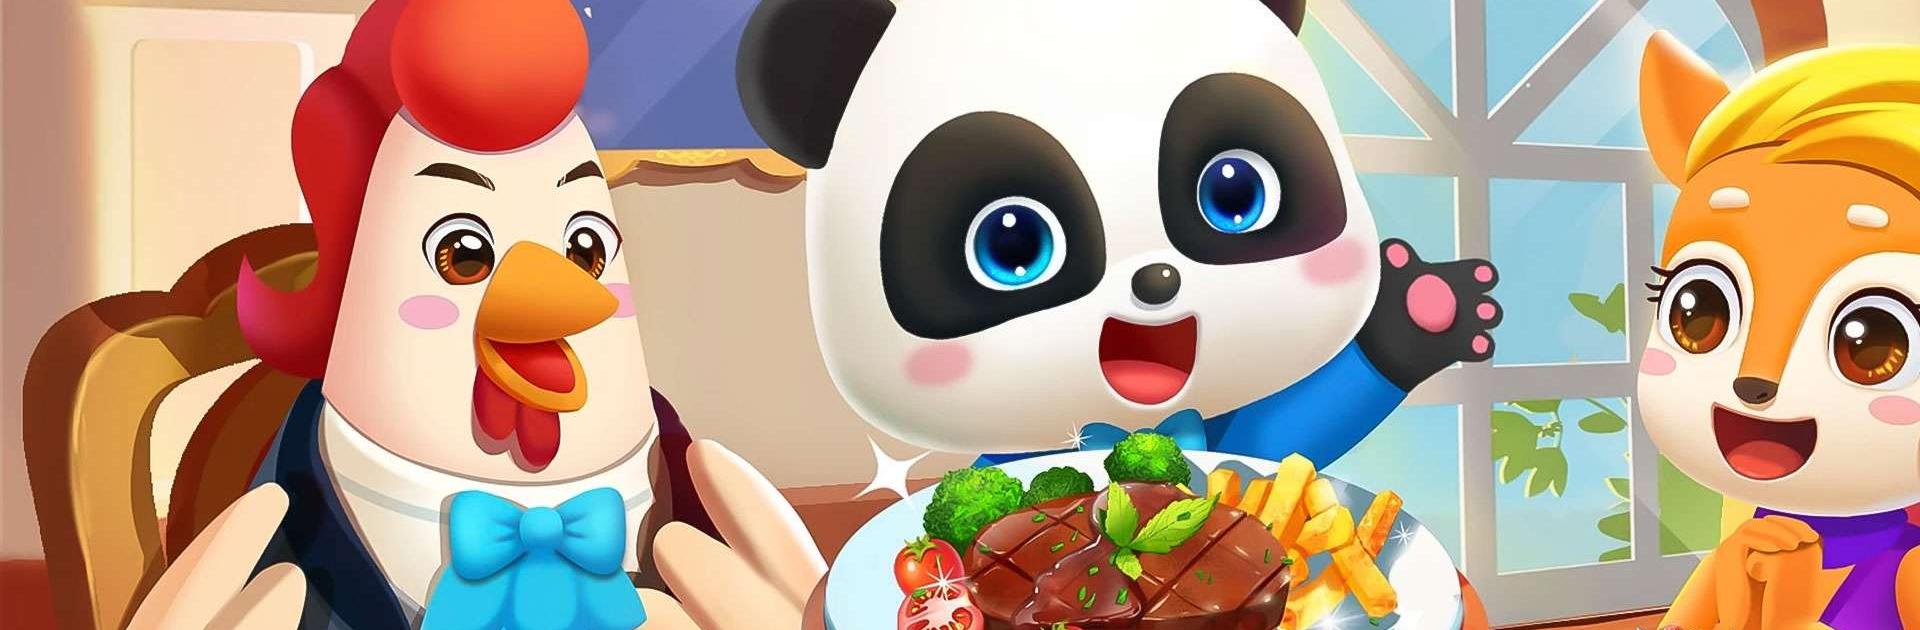 Little Panda's World Recipes